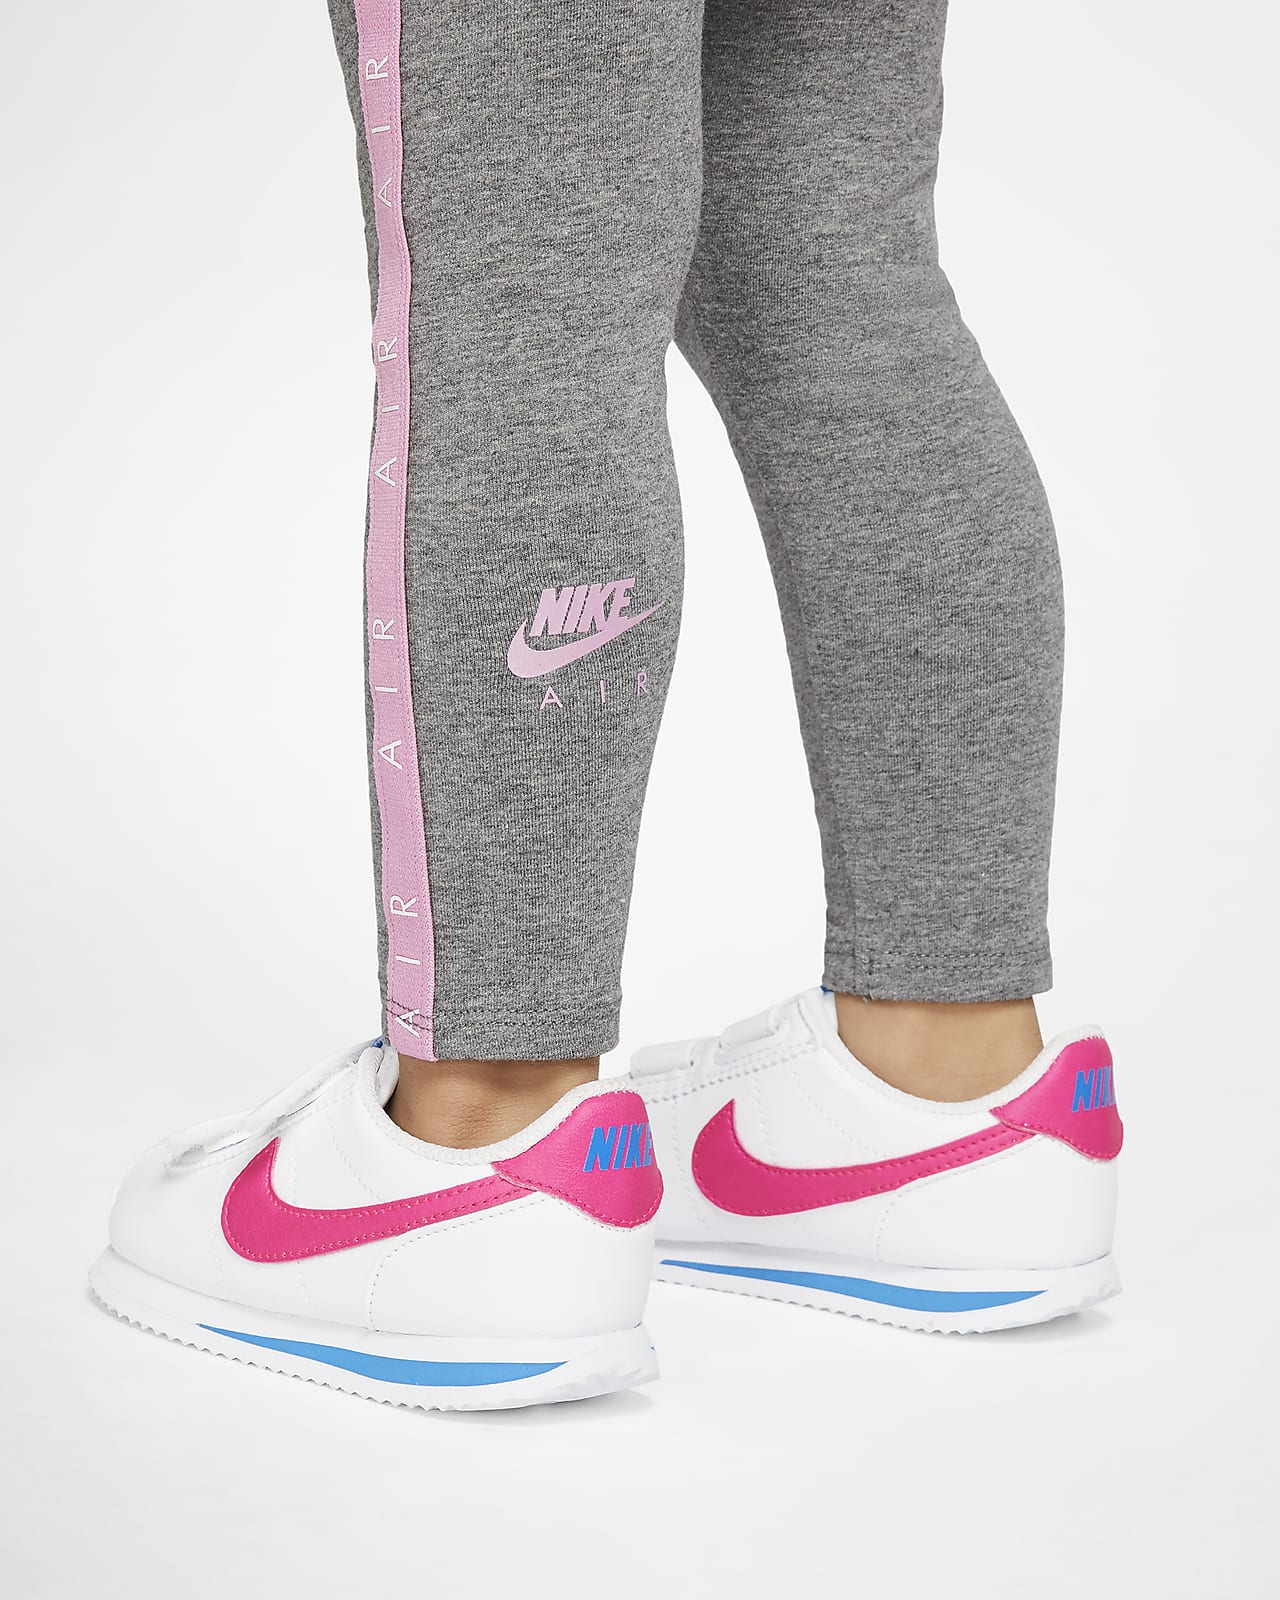 Nike Air Ft Po Legging Set - Sets